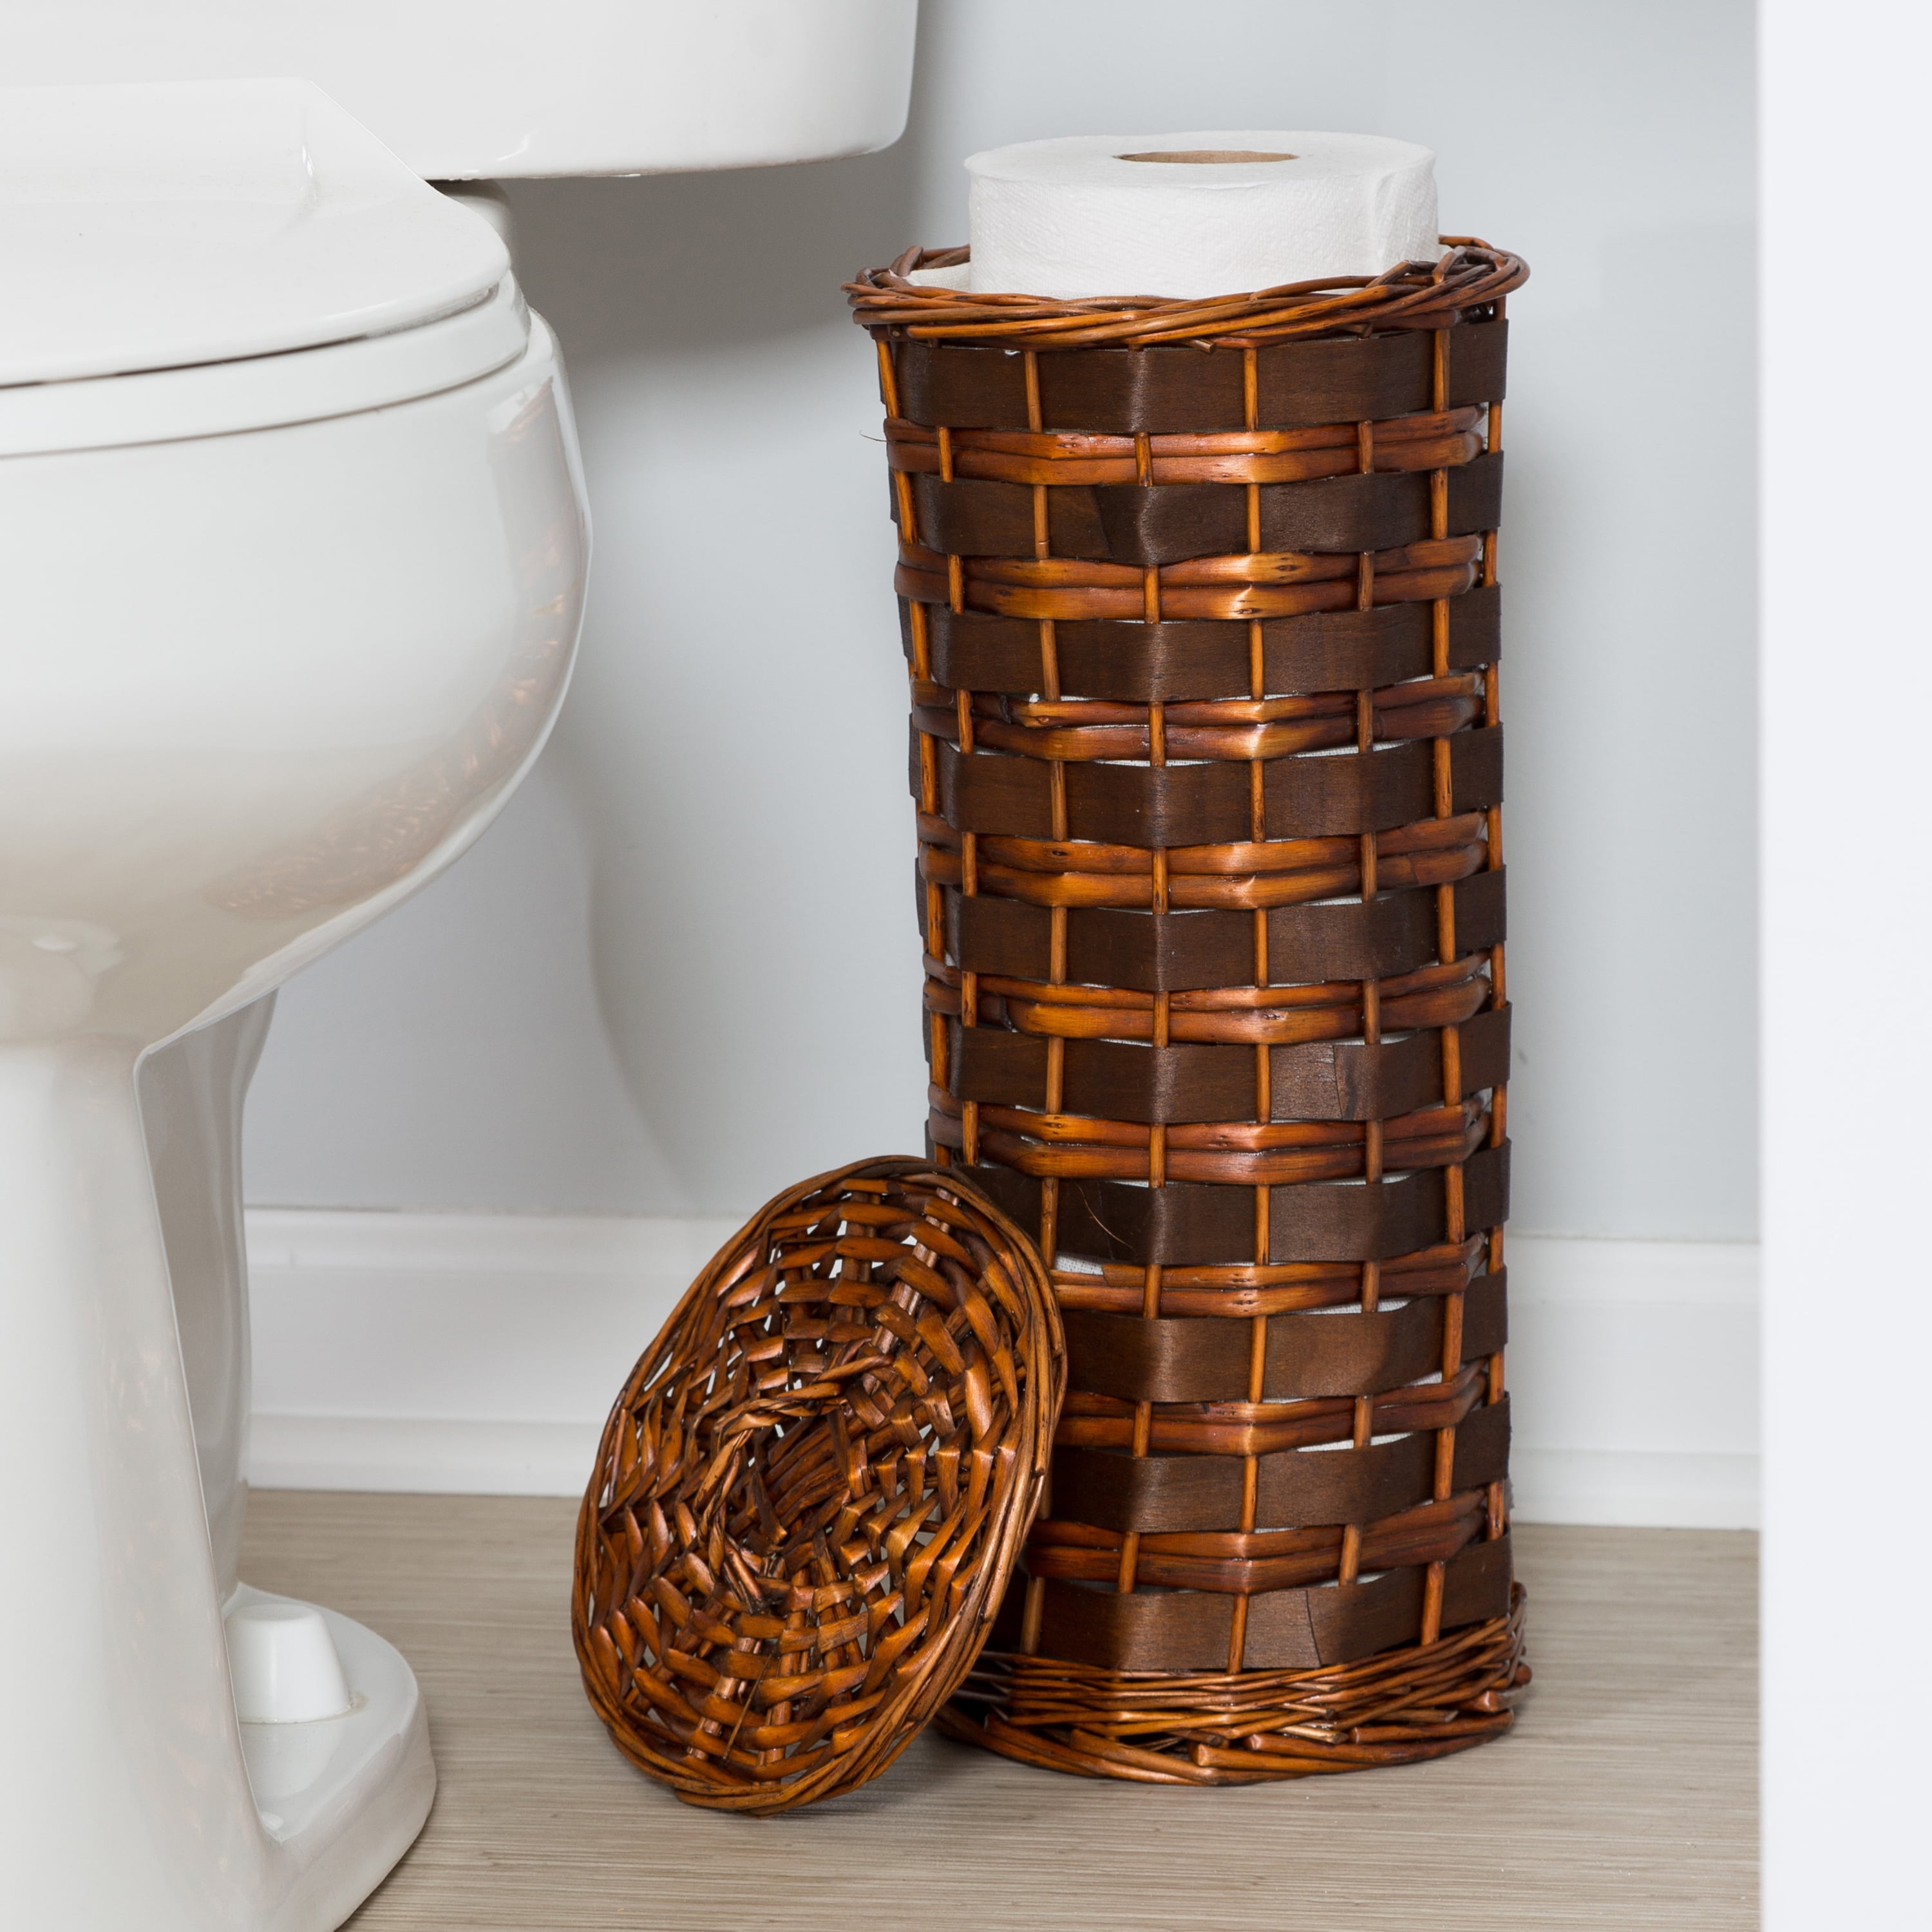 Honey-Can-Do 7-Piece Split Willow Woven Bathroom Storage Basket Set